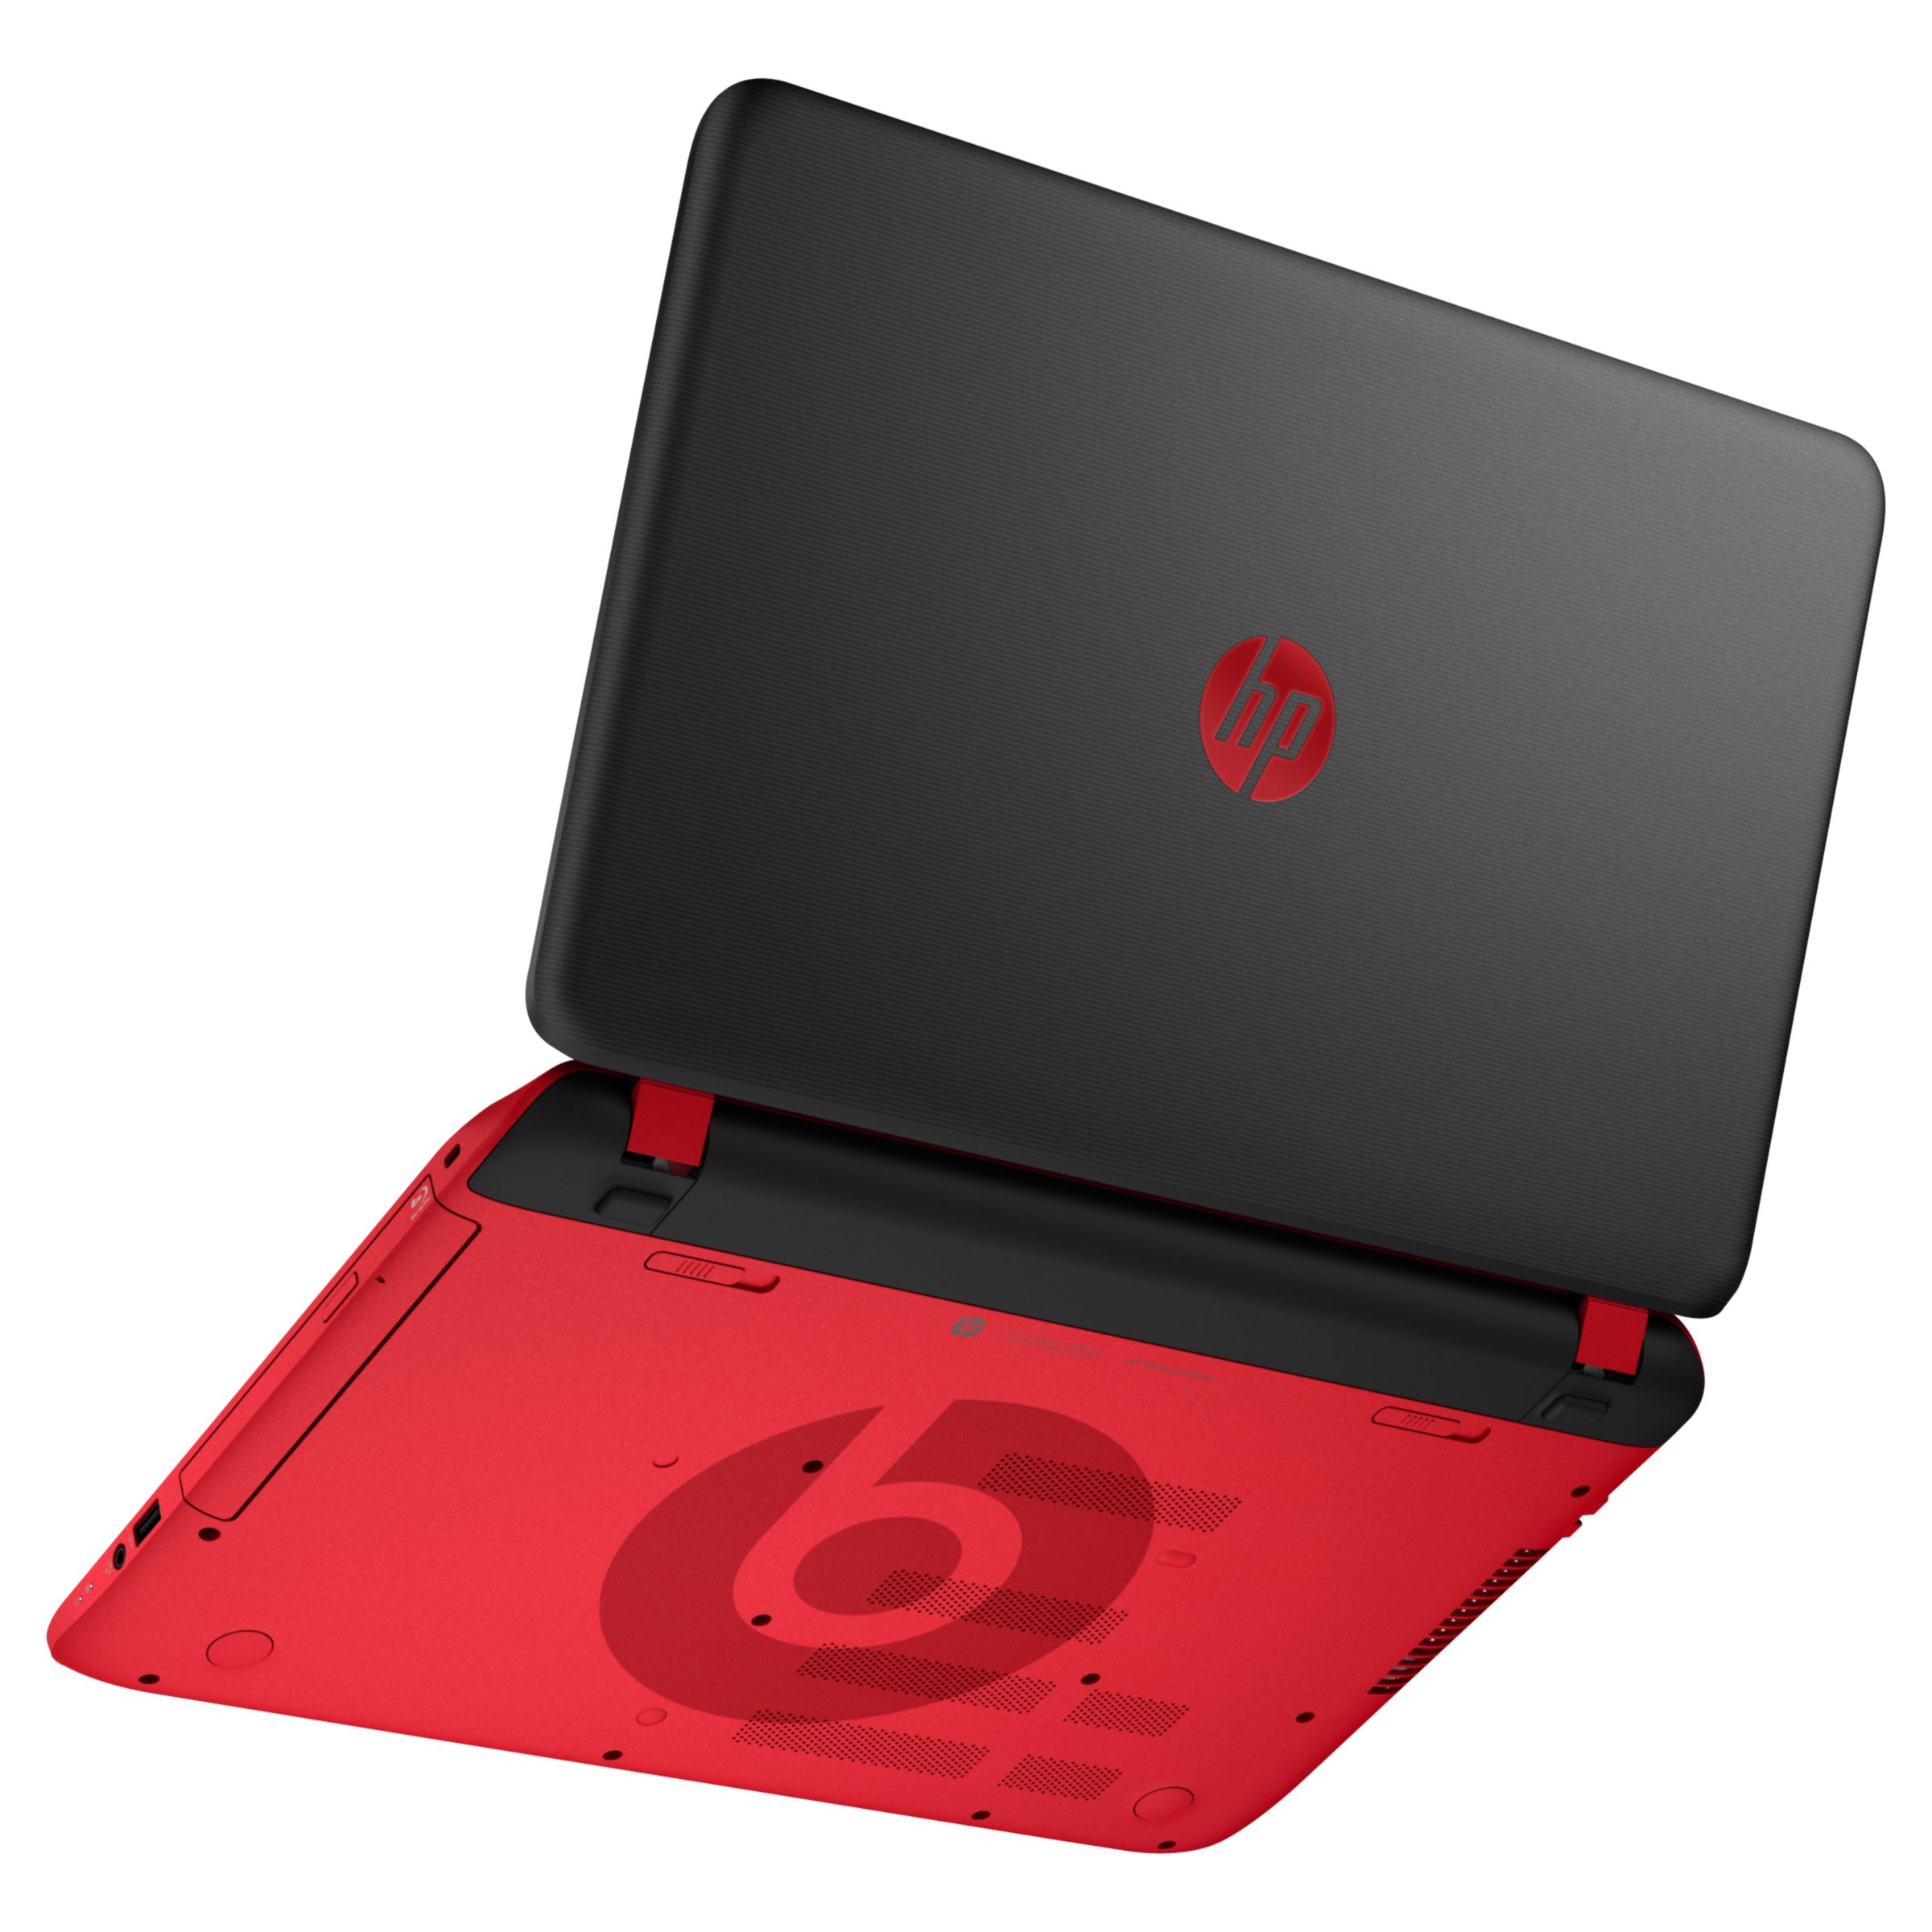 HP Pavilion Beats Edition 15-p099na Laptop, AMD A8, 8GB RAM, 1TB, 